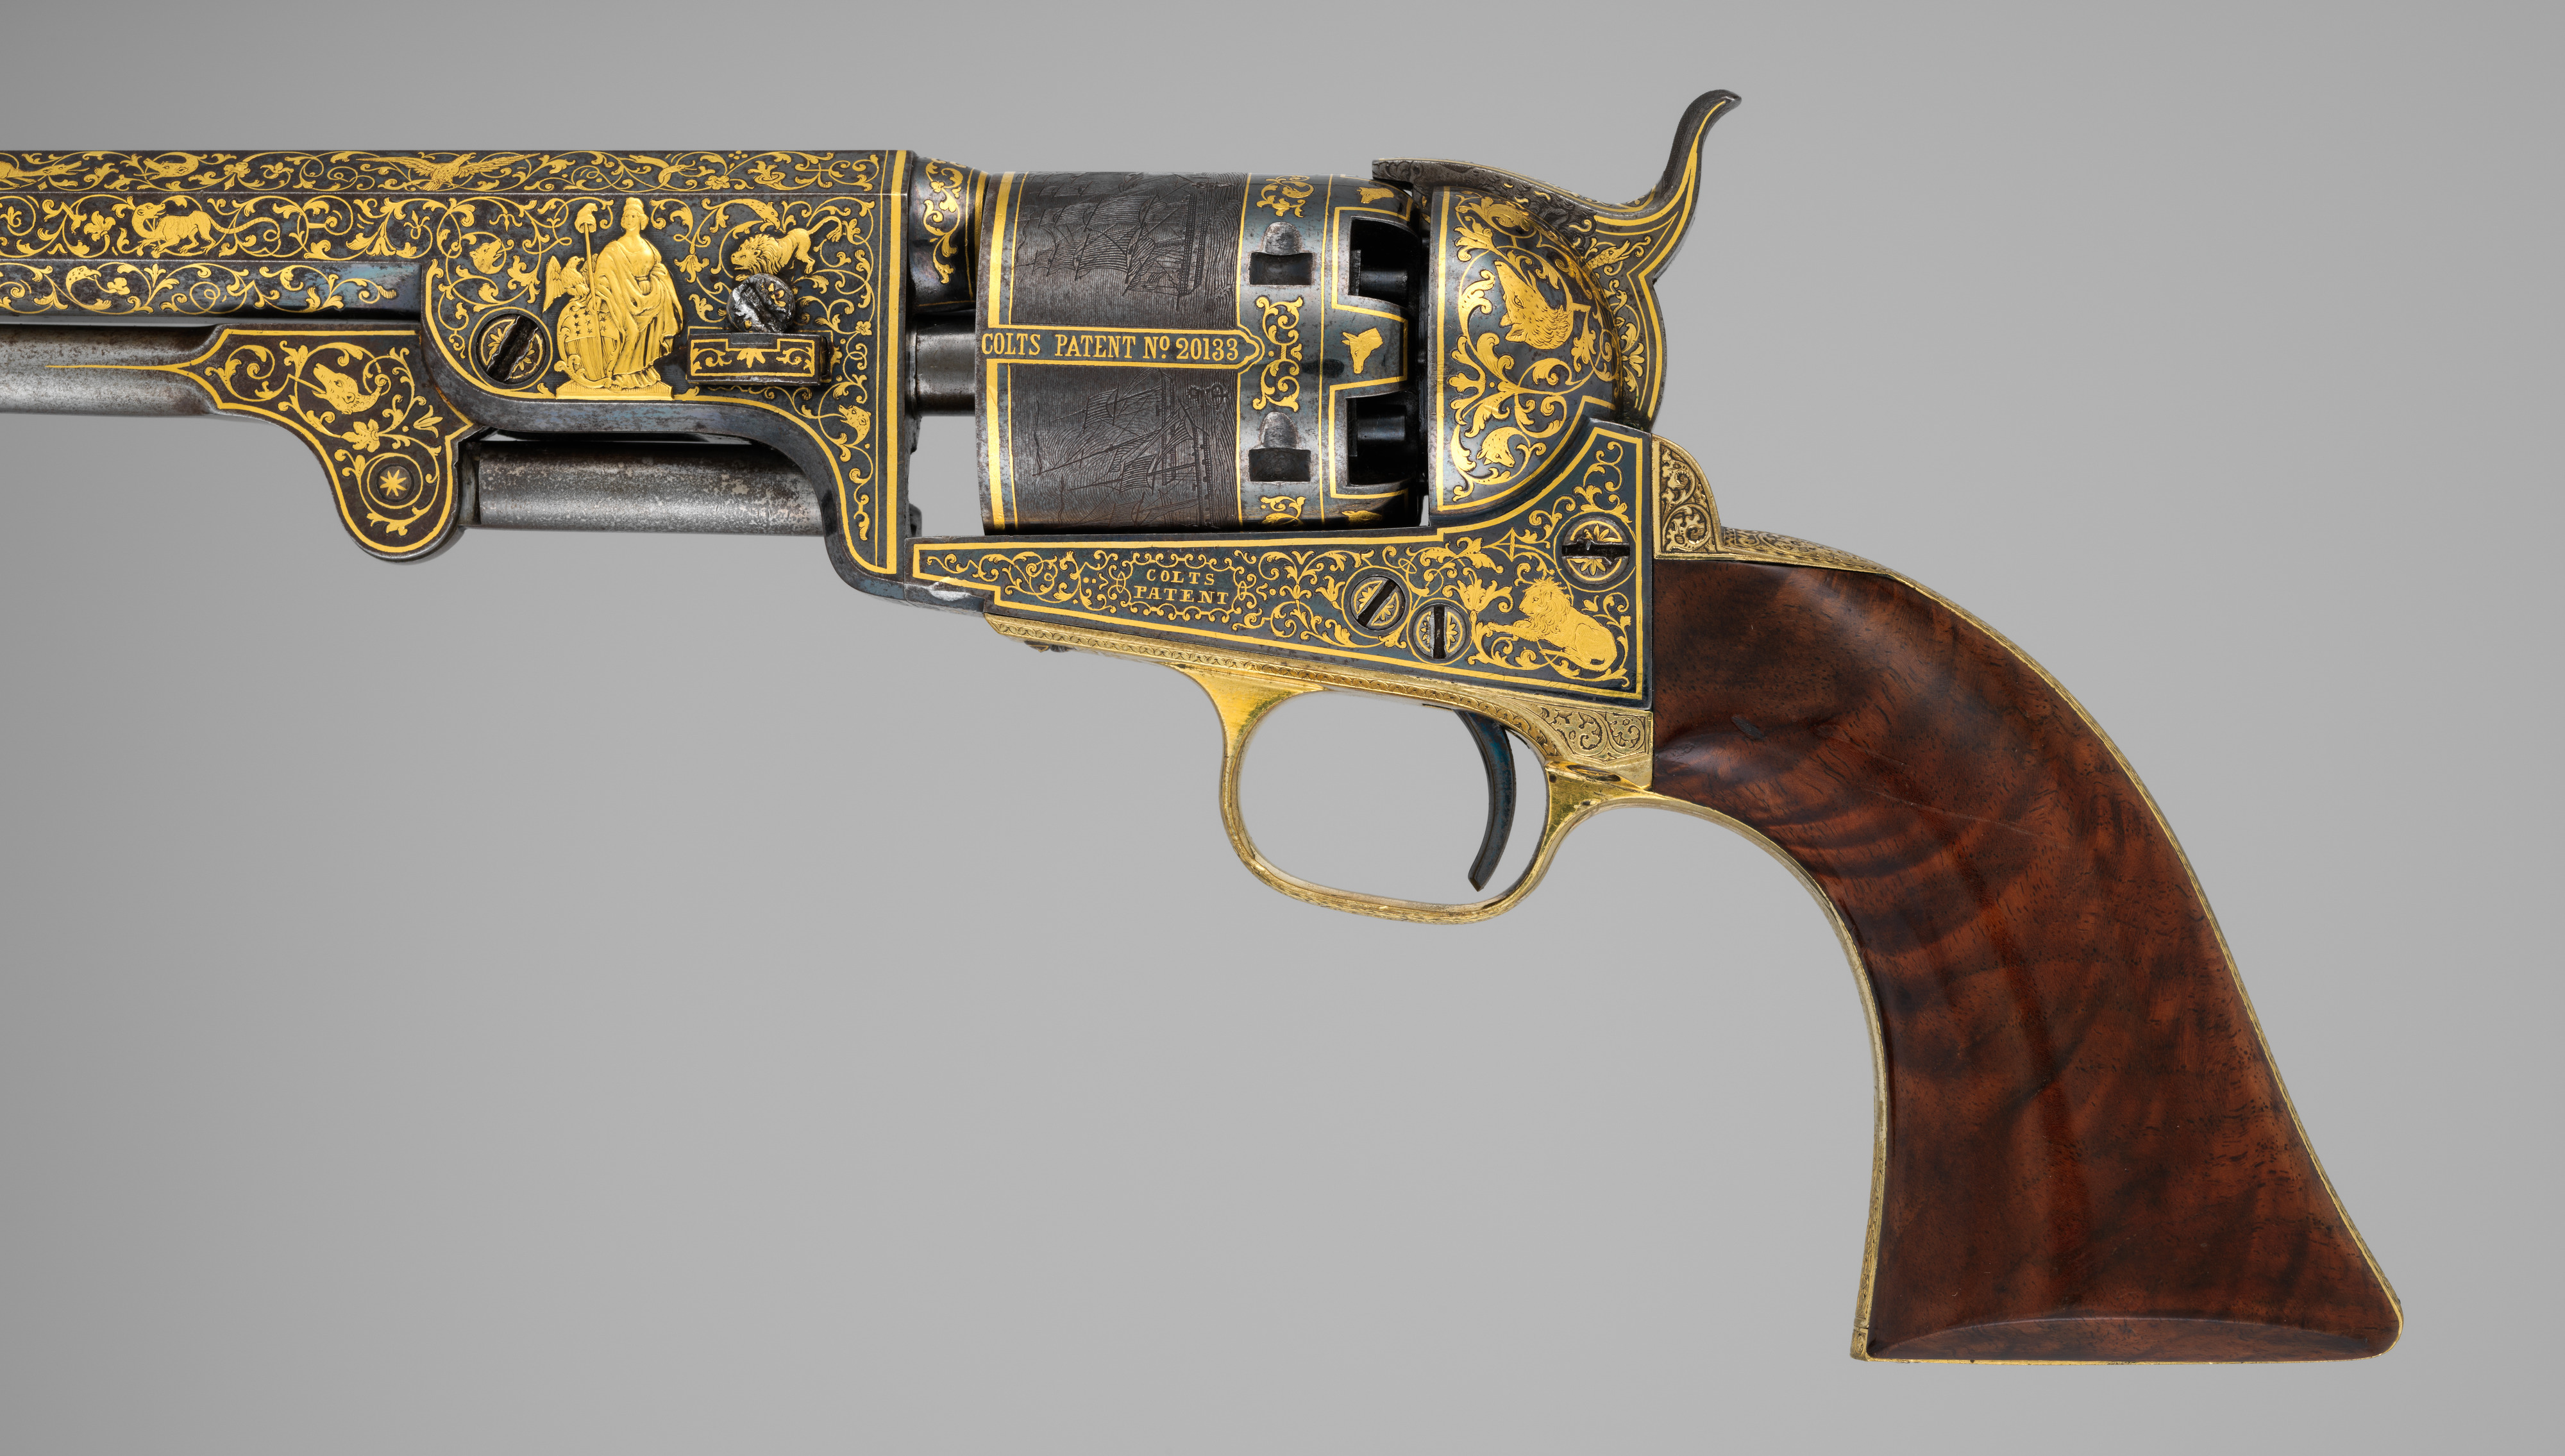 1851 Navy Engraved .44 Cal Black Powder Revolver